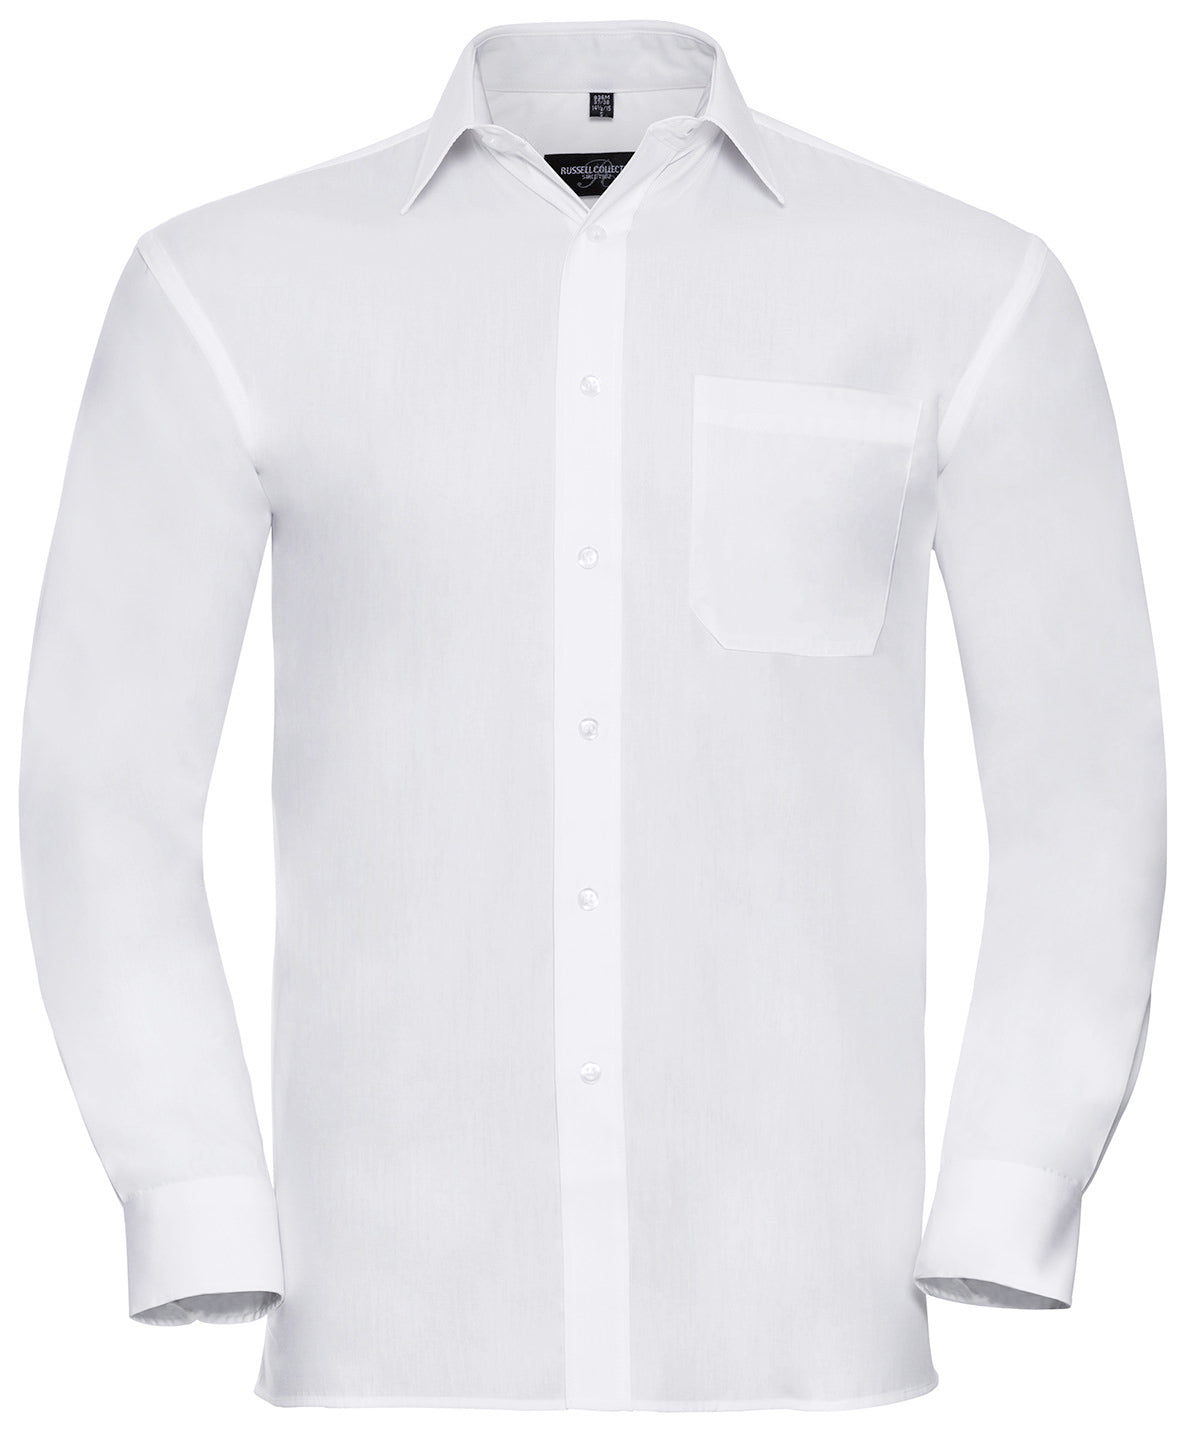 Bolir - Long Sleeve Pure Cotton Easycare Poplin Shirt